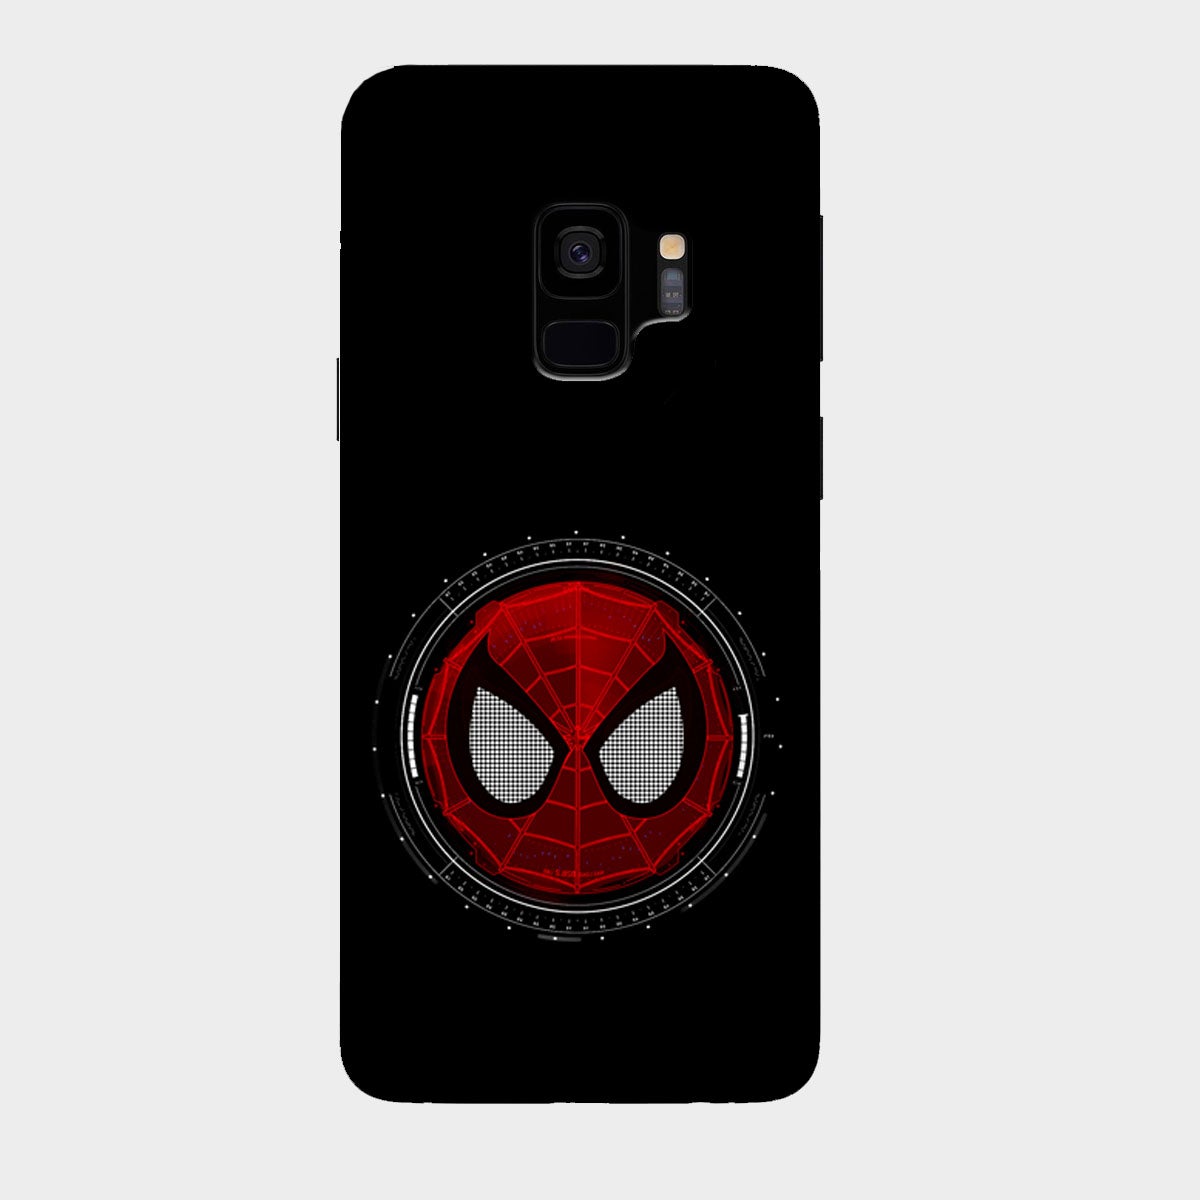 Spider Man - Round - Mobile Phone Cover - Hard Case - Samsung - Samsung